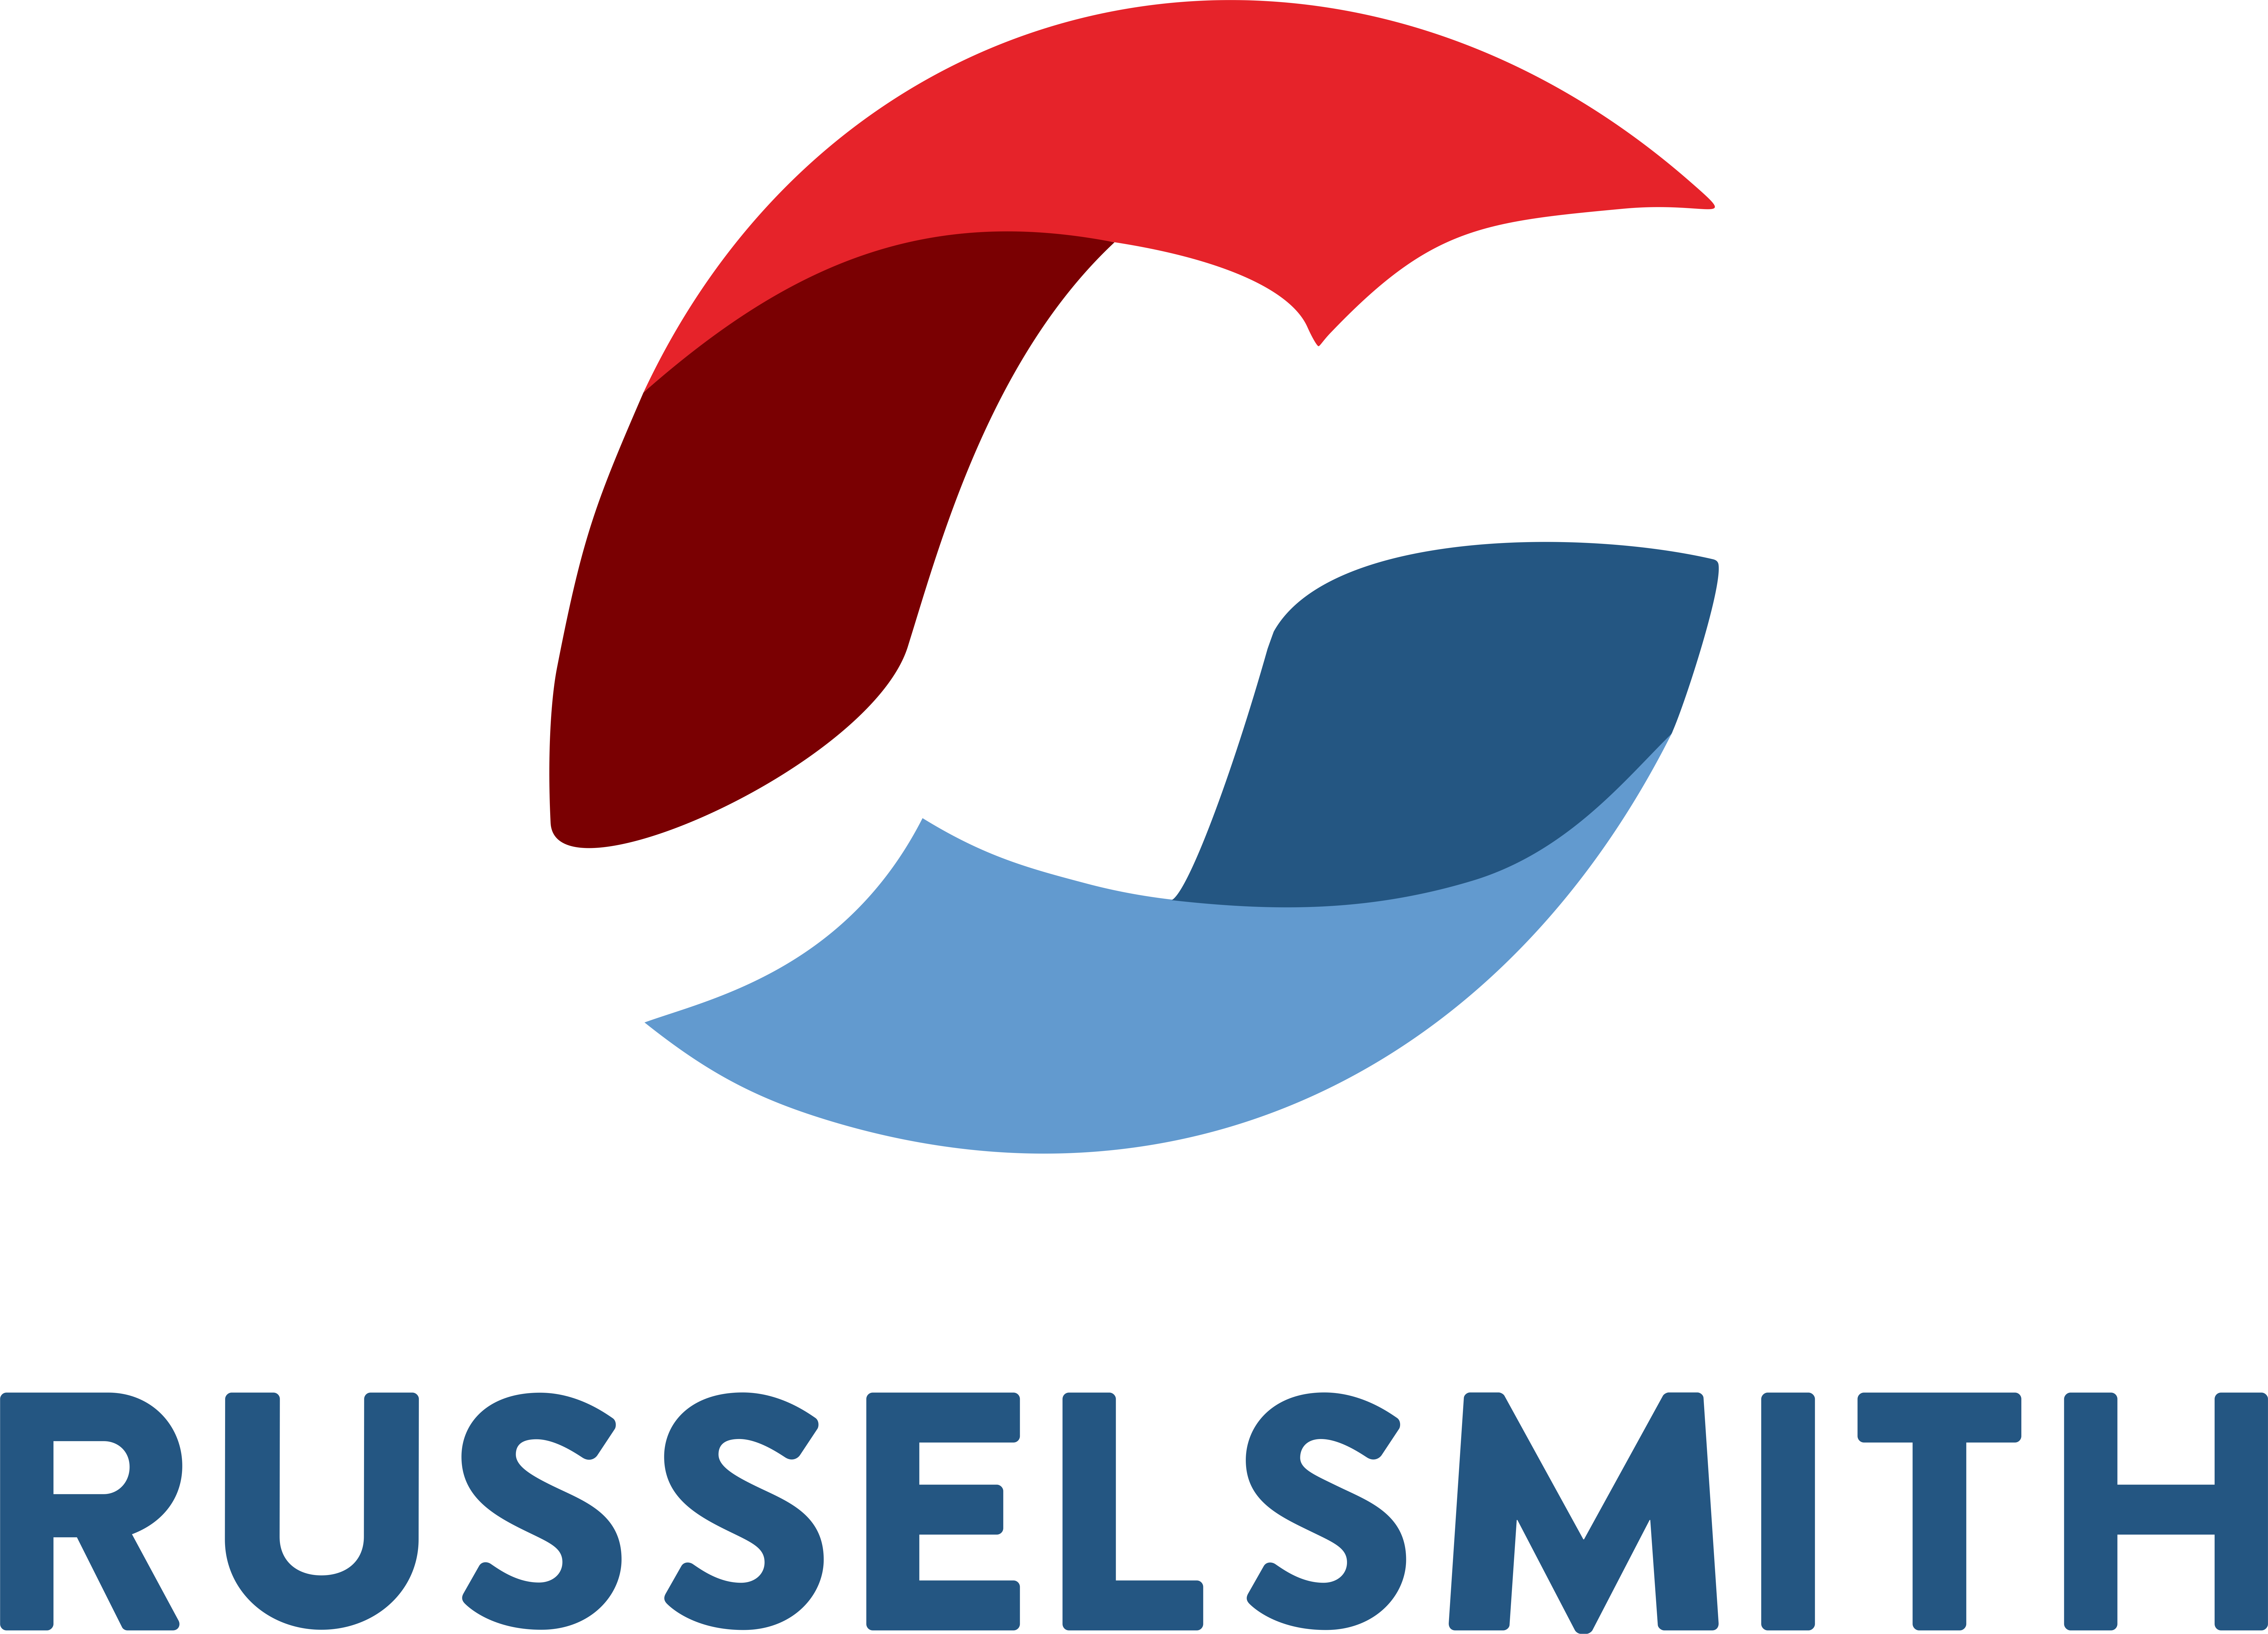 Russelsmith Logo